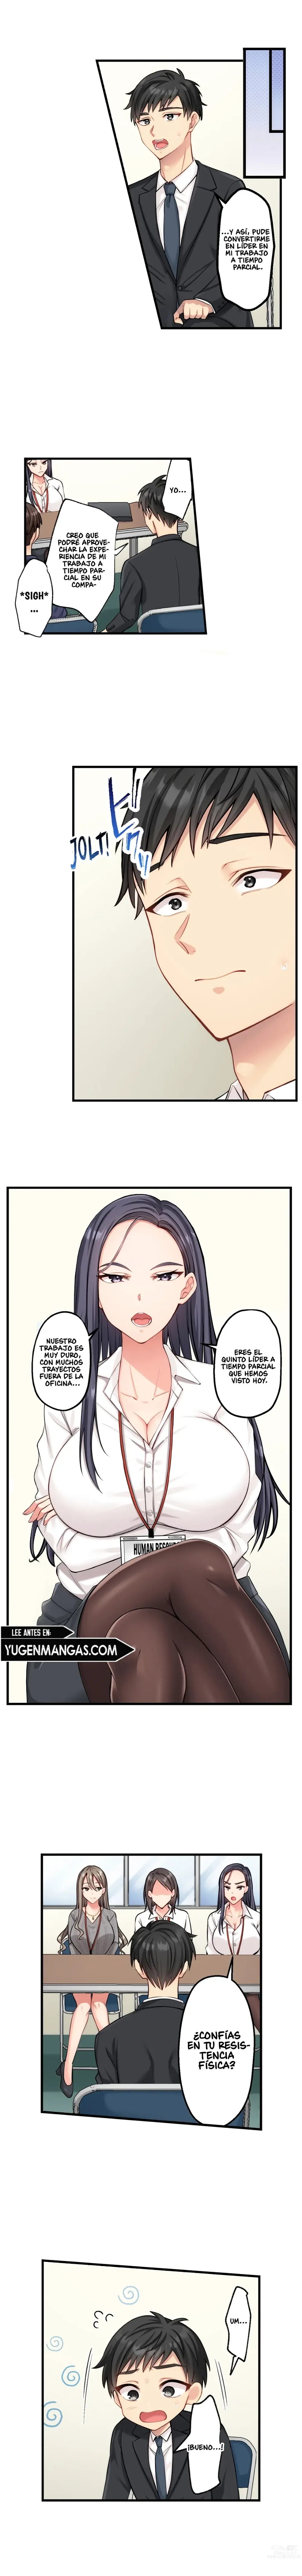 Page 5 of manga How Hard-Working Women Wind Down